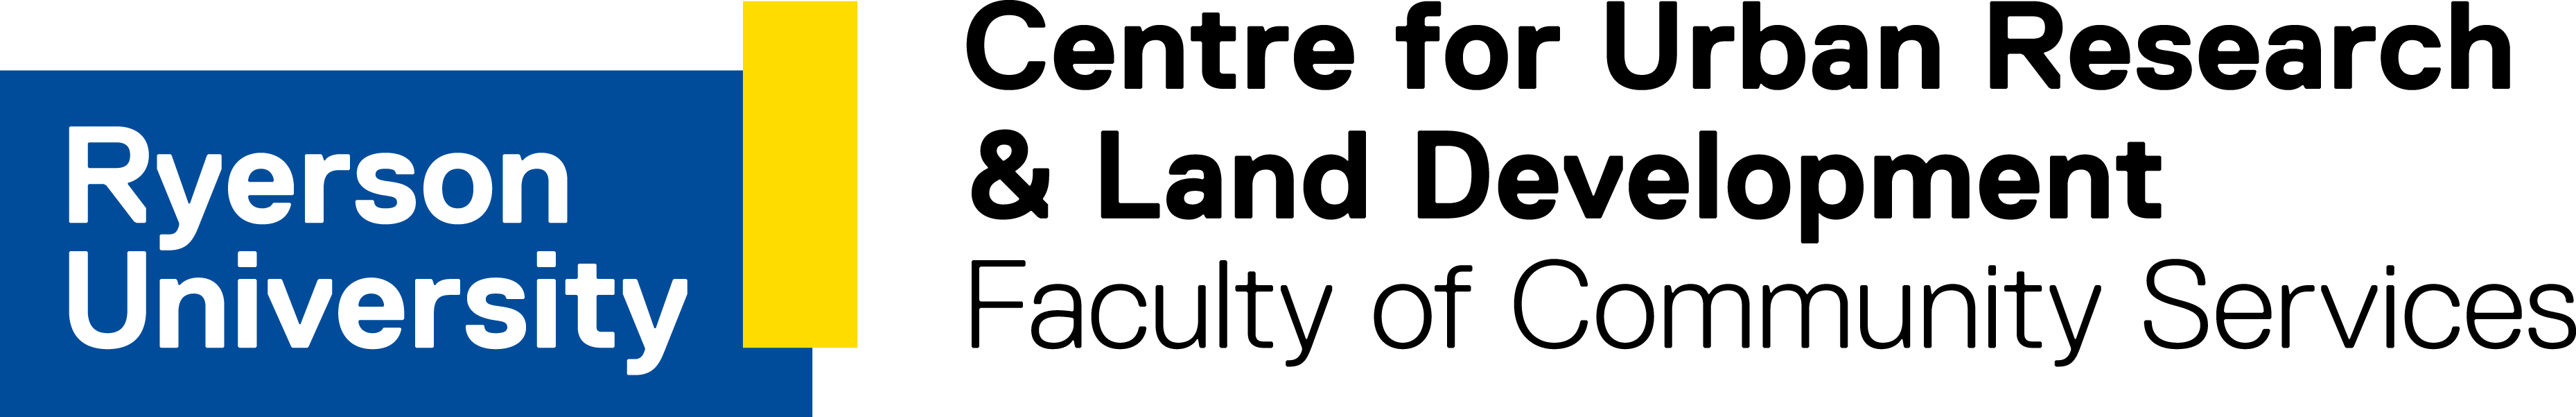 Centre for Urban Research and Land Development, Toronto Metropolitan University